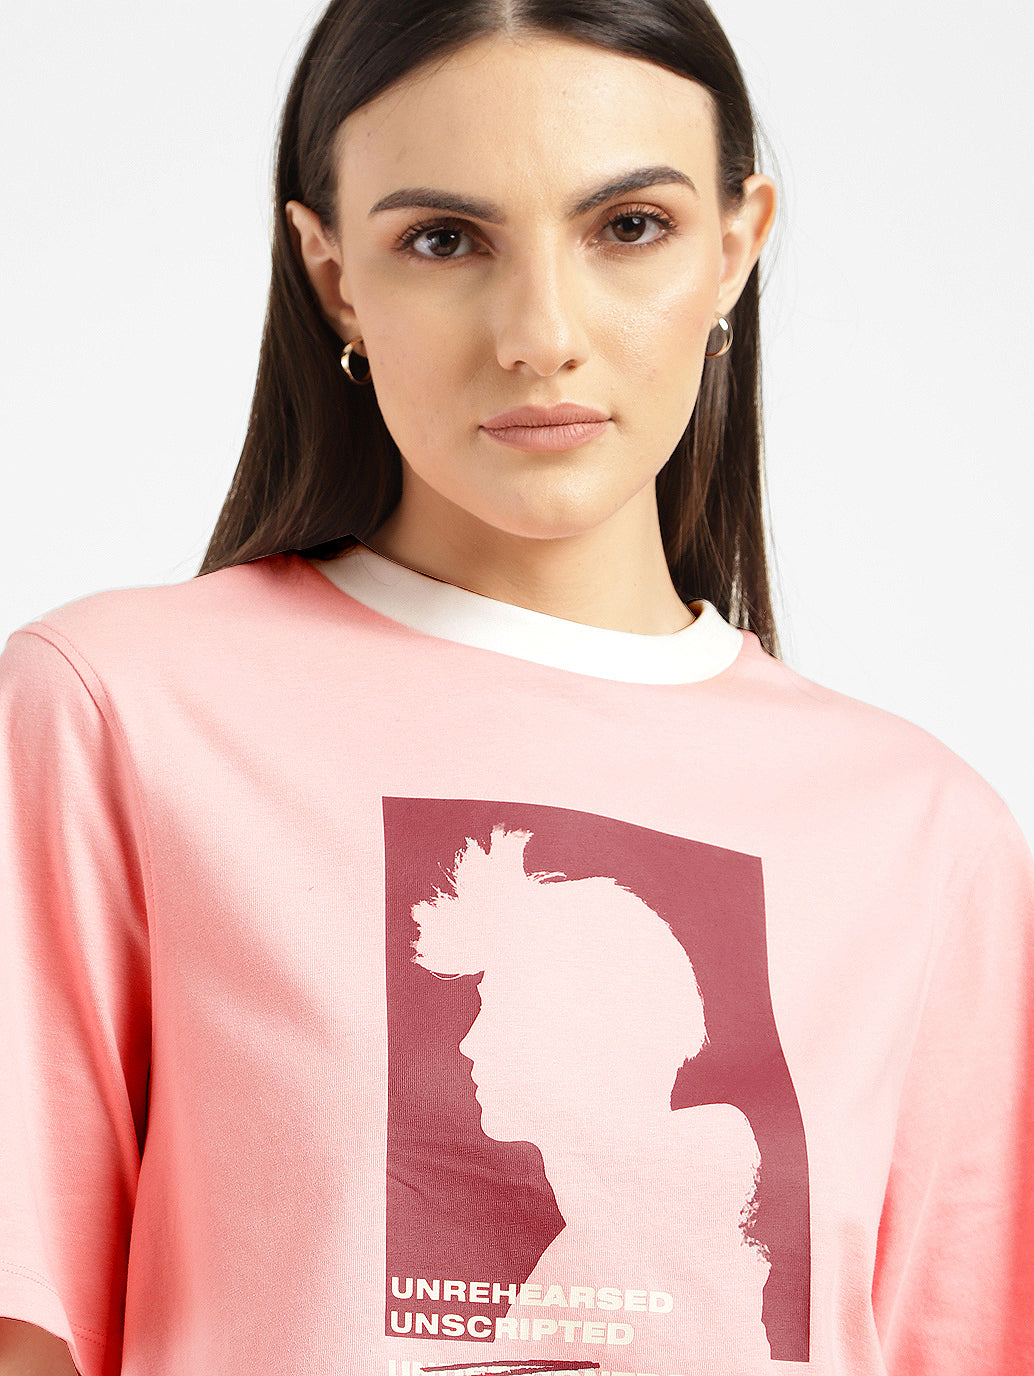 Women's Graphic Print Crew Neck T-Shirt